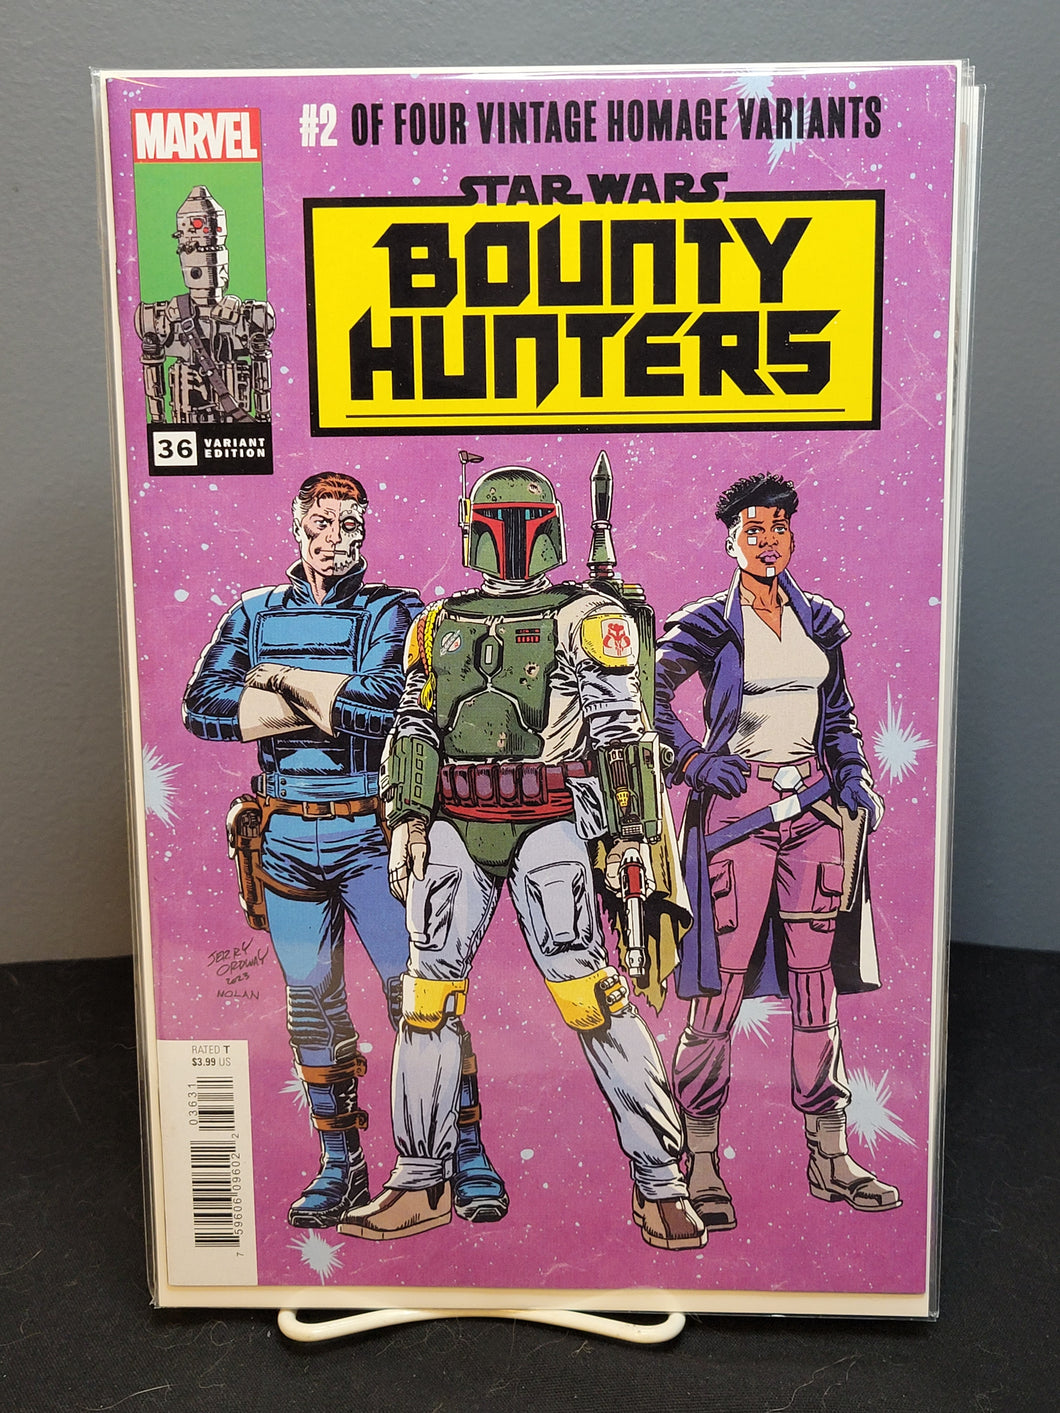 Star Wars Bounty Hunters #36 Variant